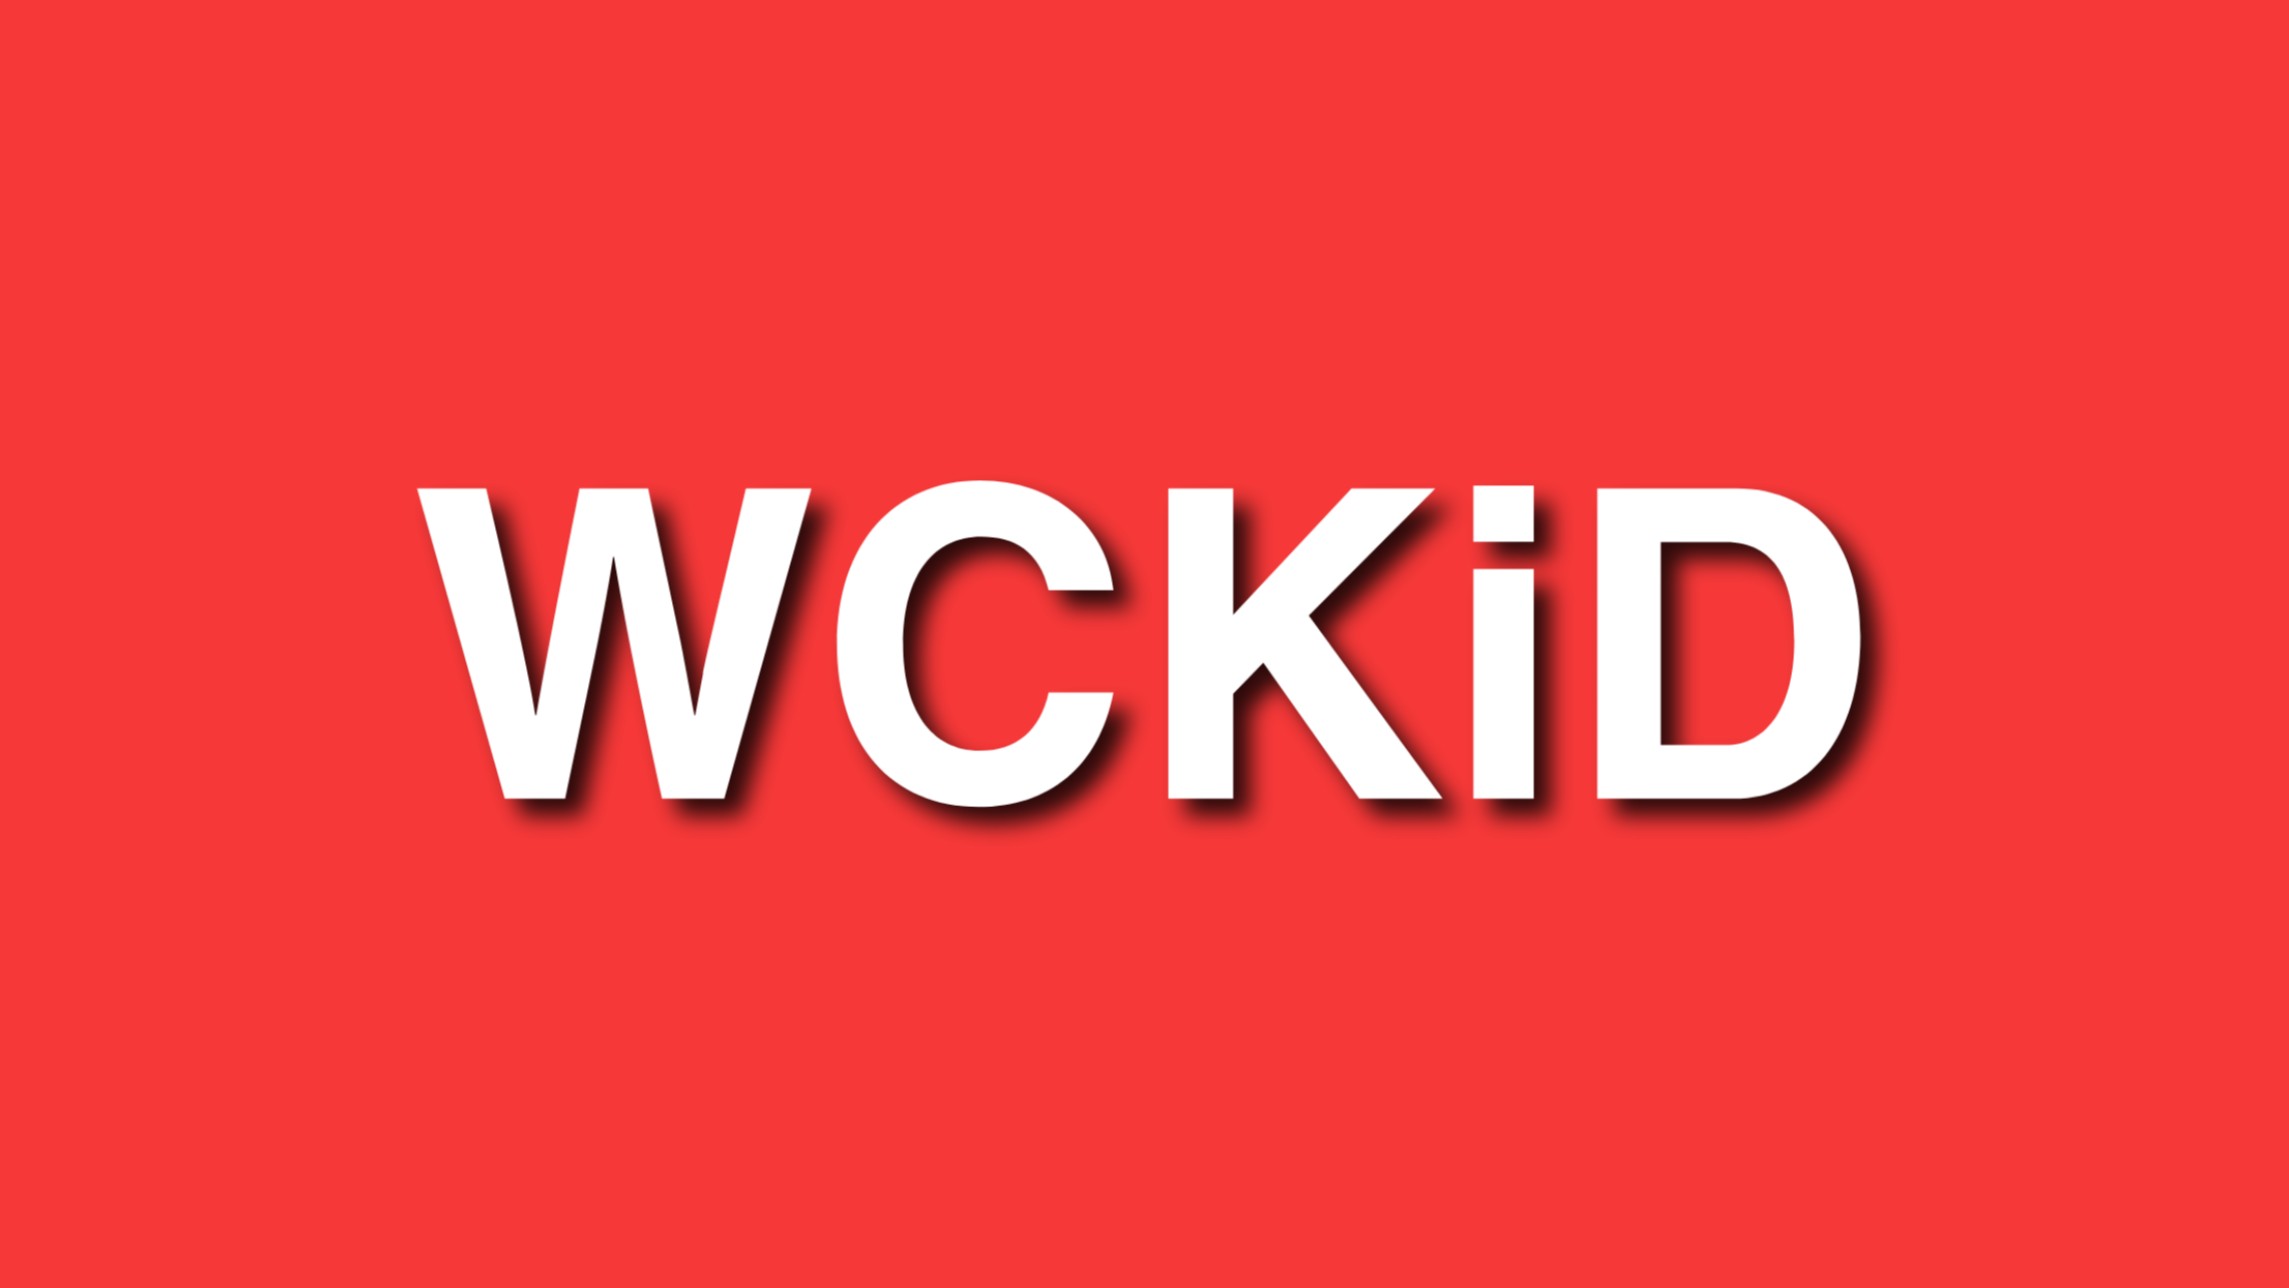 WCKiD Typography Red Background 2289x1288